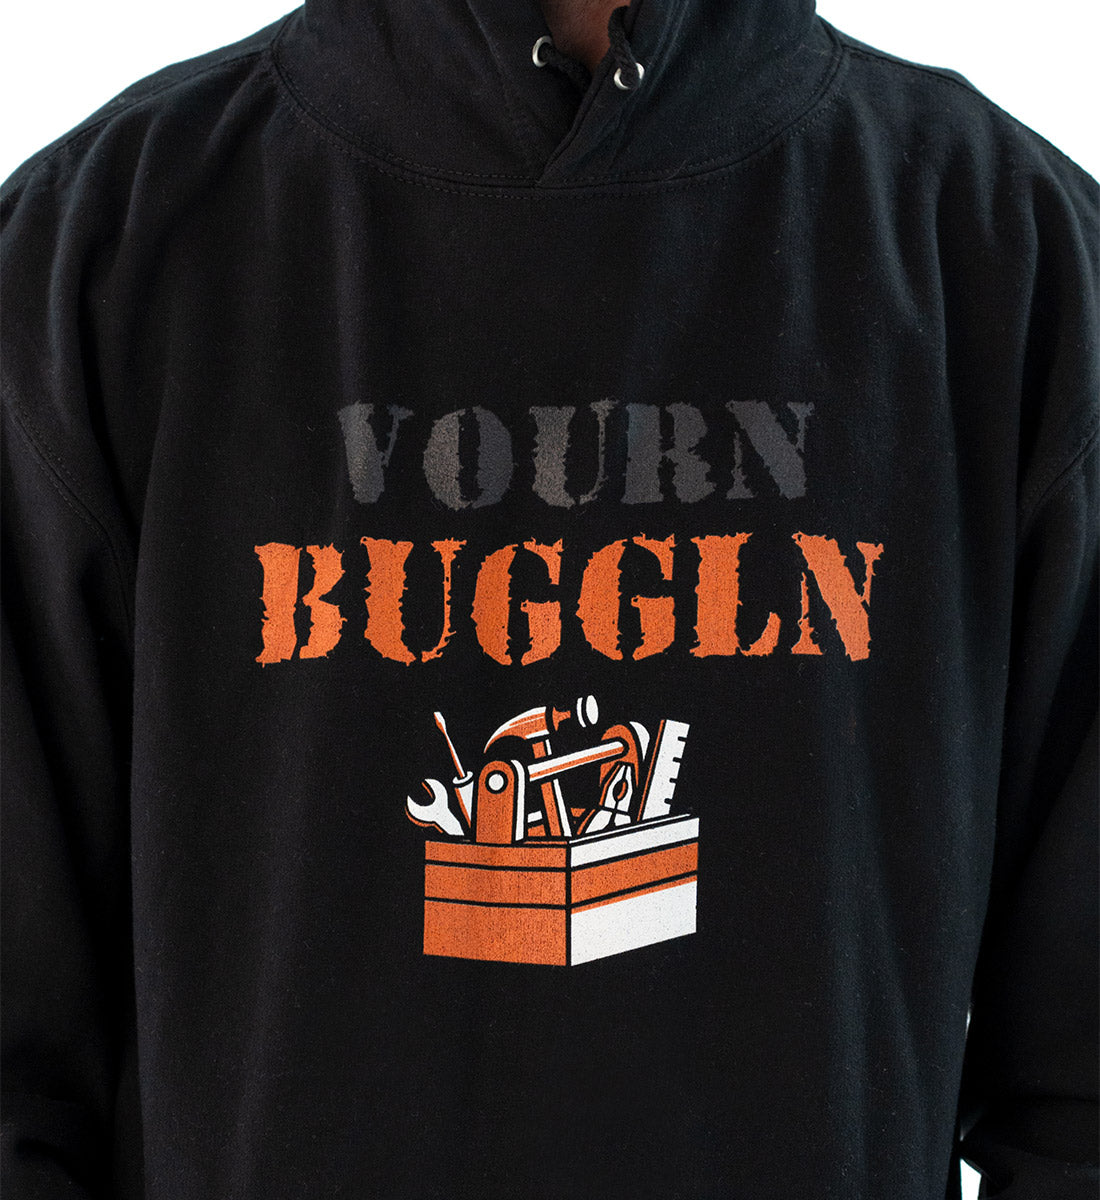 Vourn Buggln - Hintn Party | Black Unisex Kapuzenpullover Hoodie